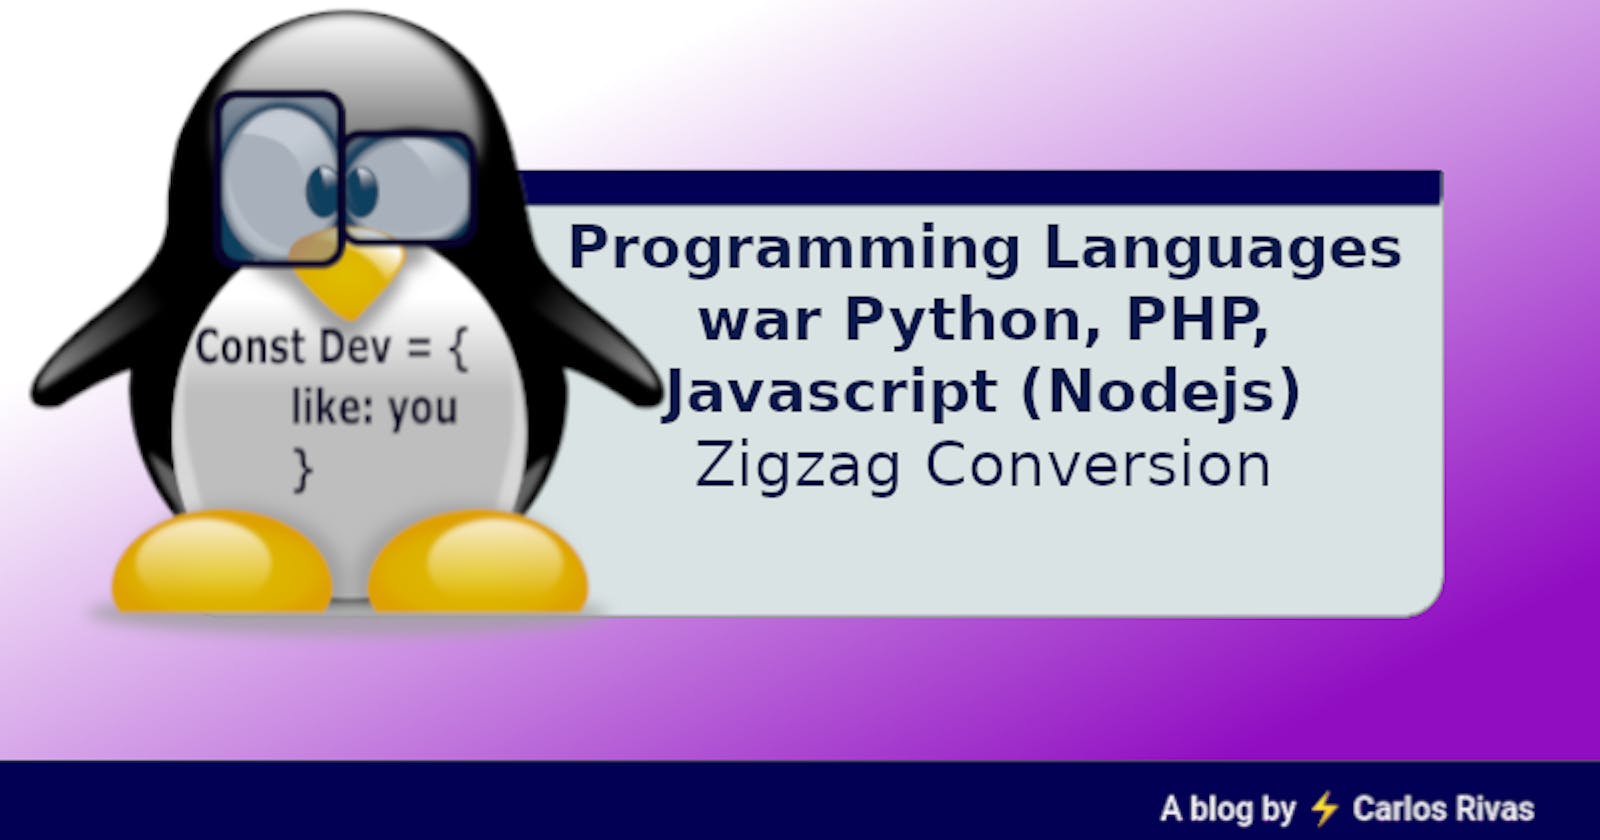 Programming Languages war
Python, PHP, Javascript (Nodejs)
ZigZag Conversion